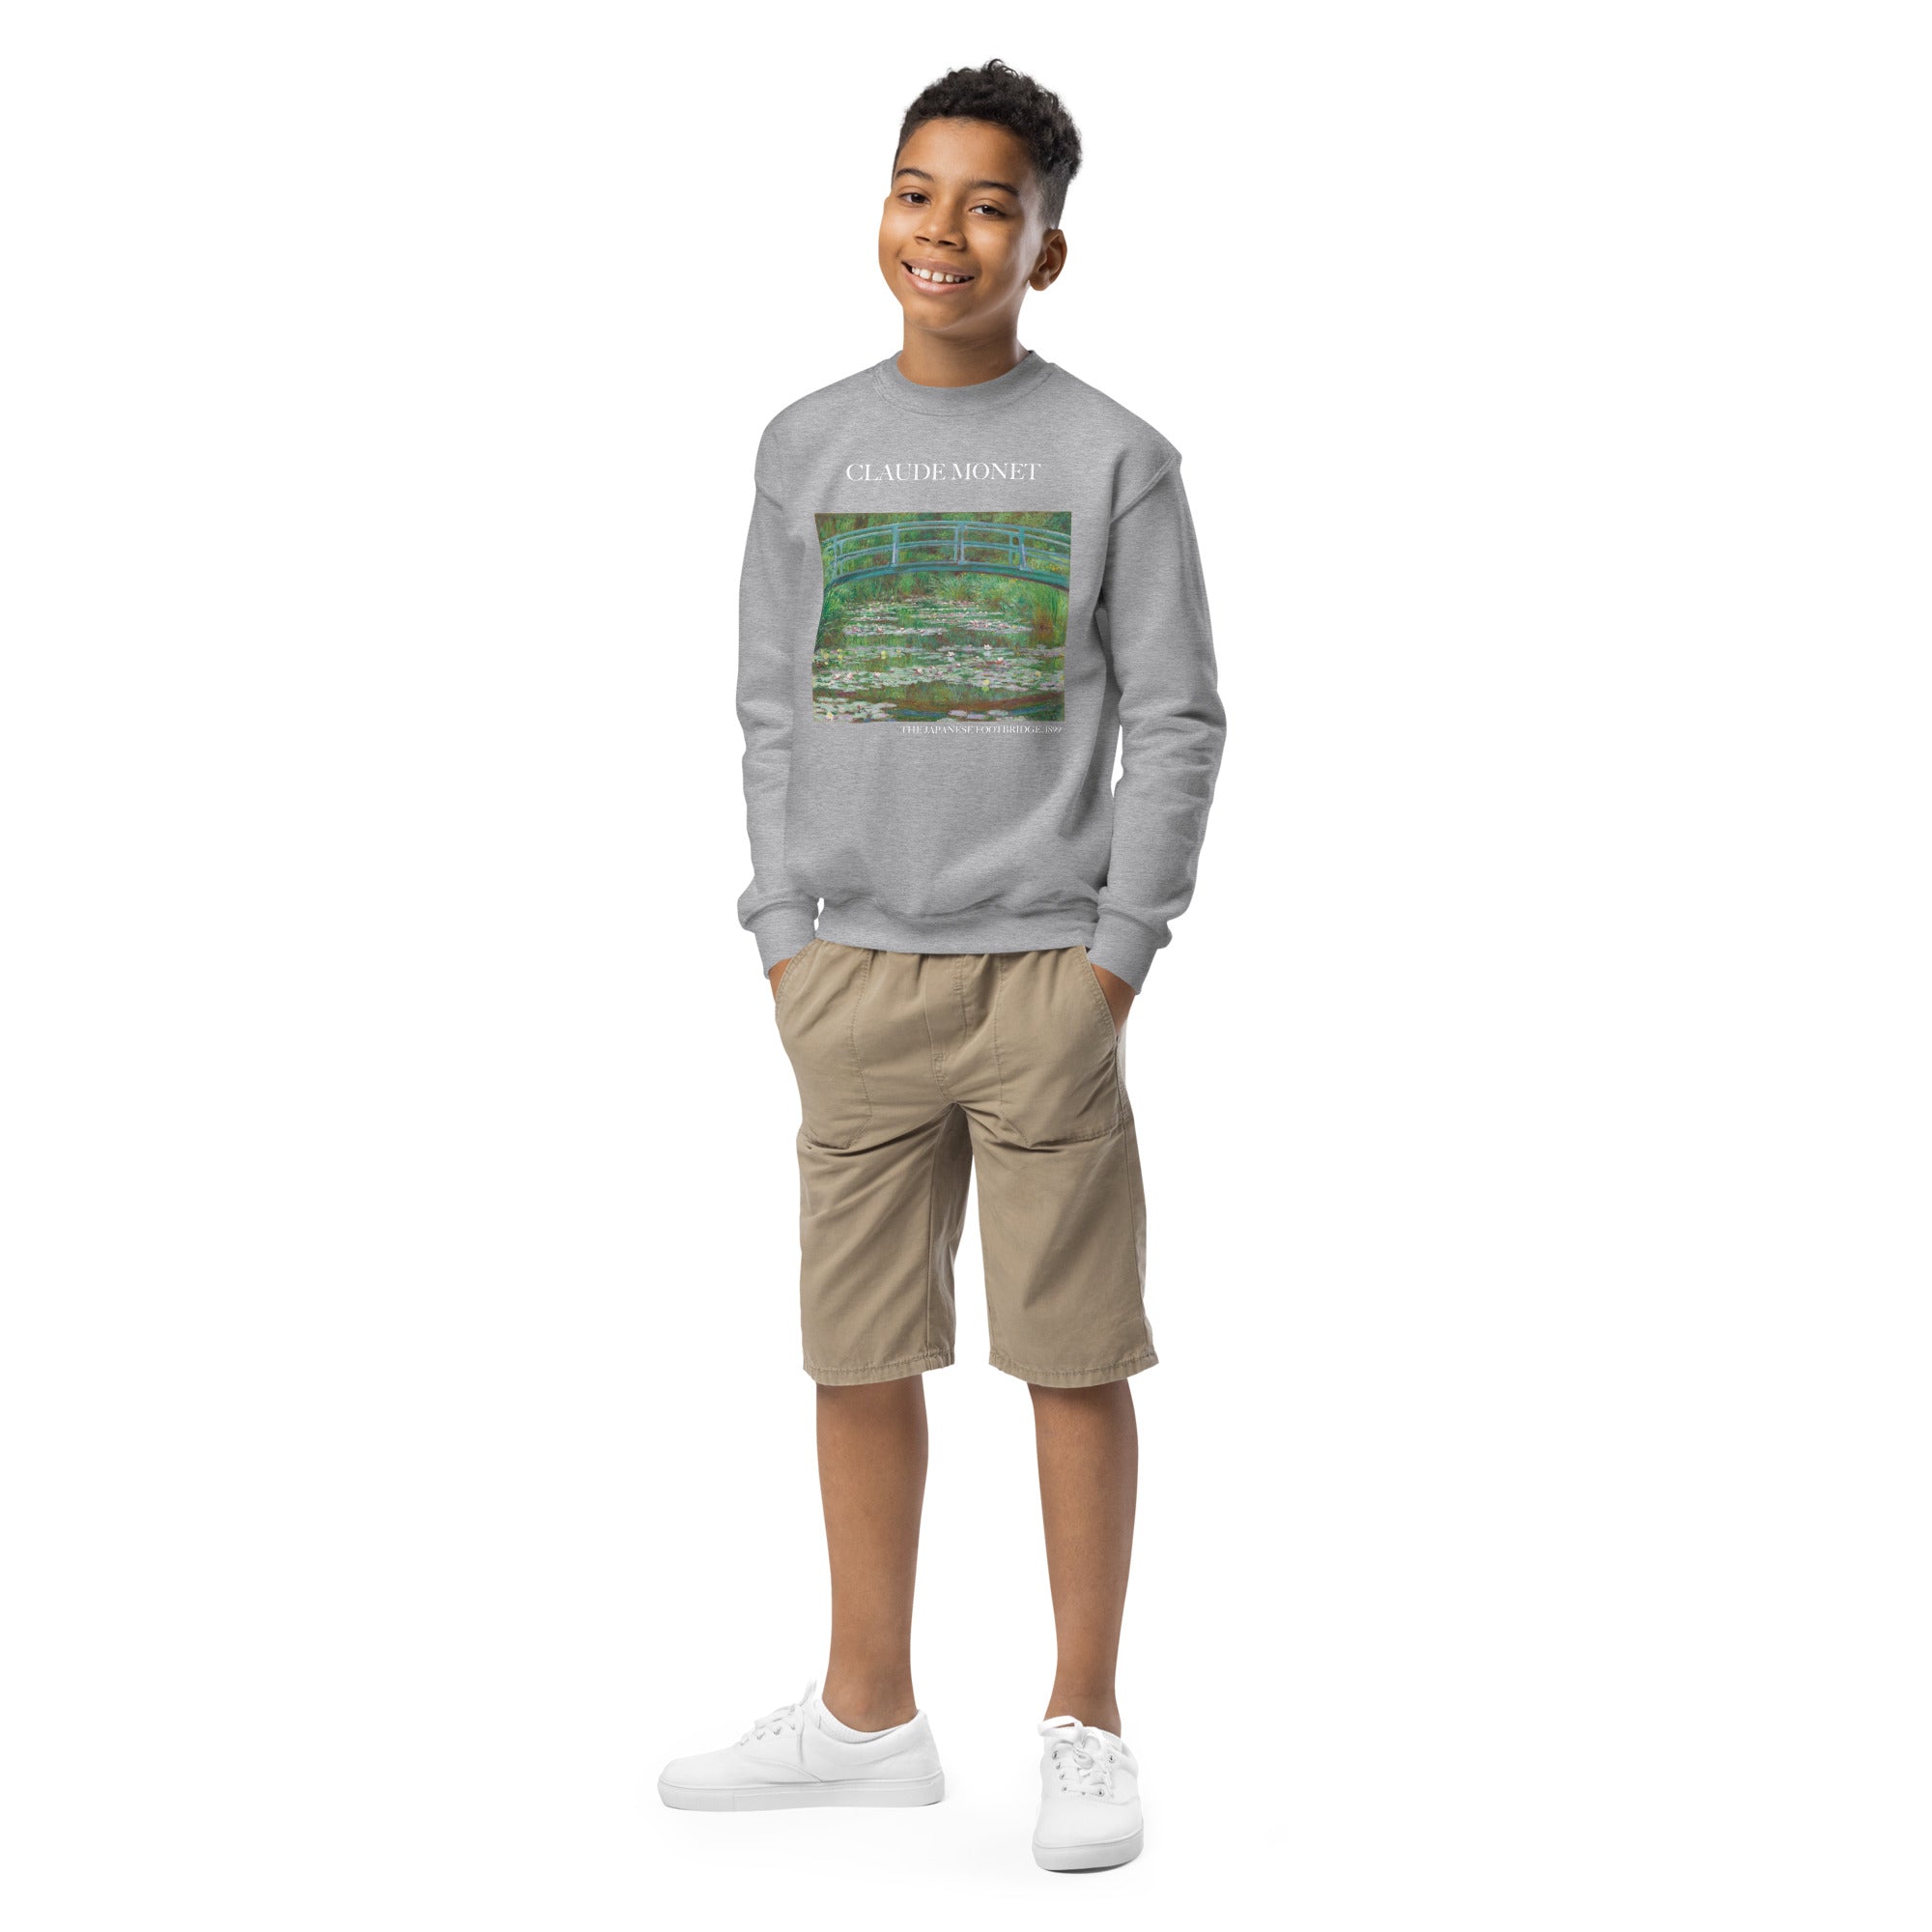 Claude Monet 'The Japanese Footbridge' Famous Painting Crewneck Sweatshirt | Premium Youth Art Sweatshirt